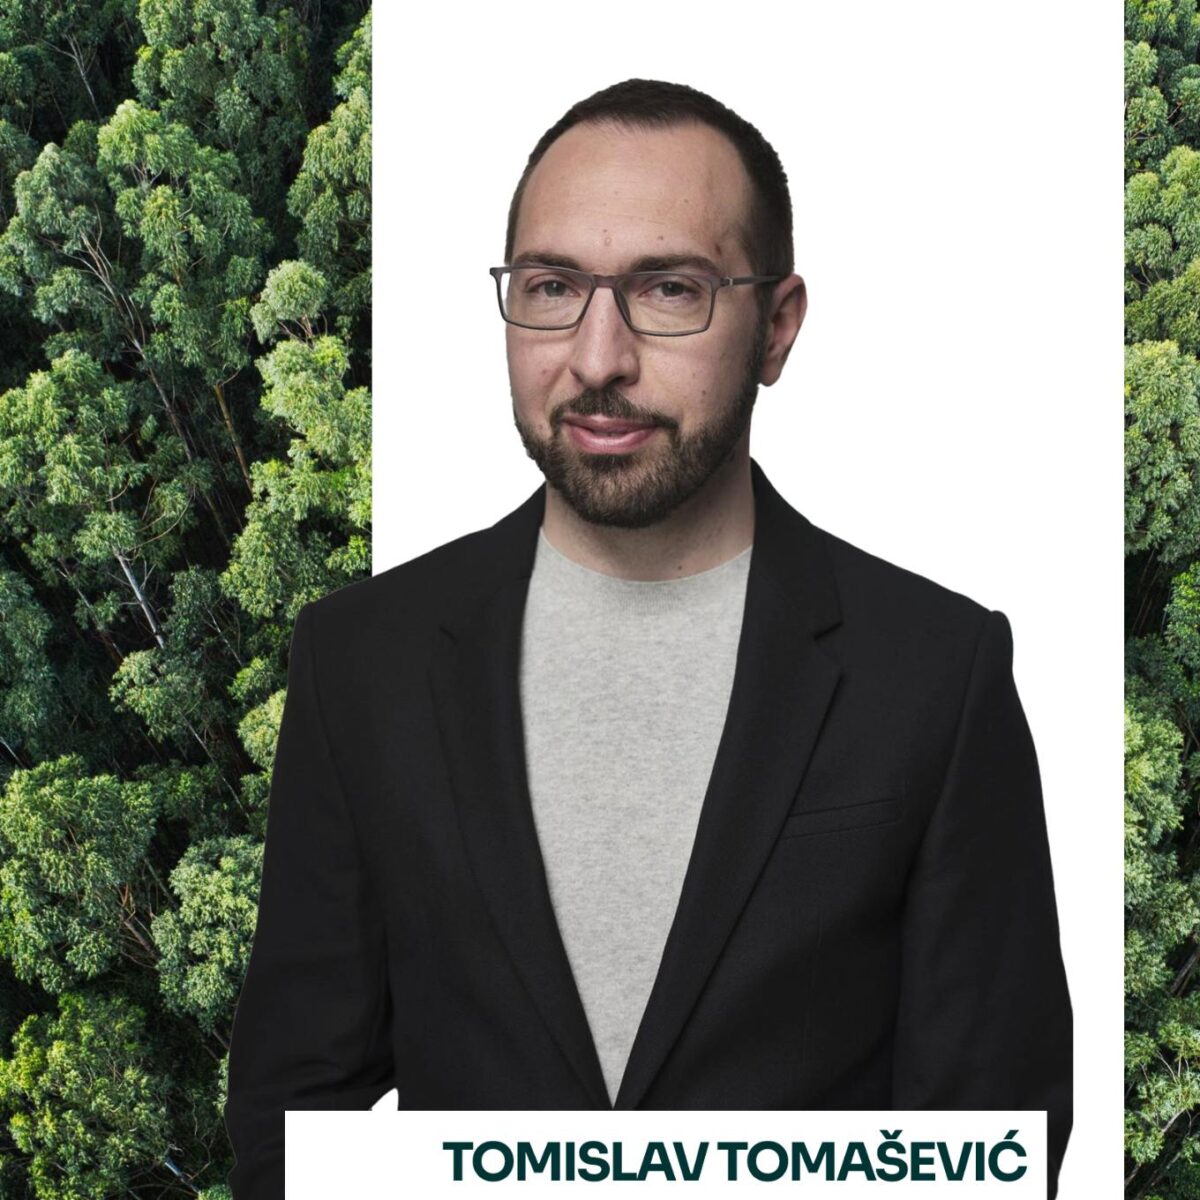 Tomislav Tomasevic